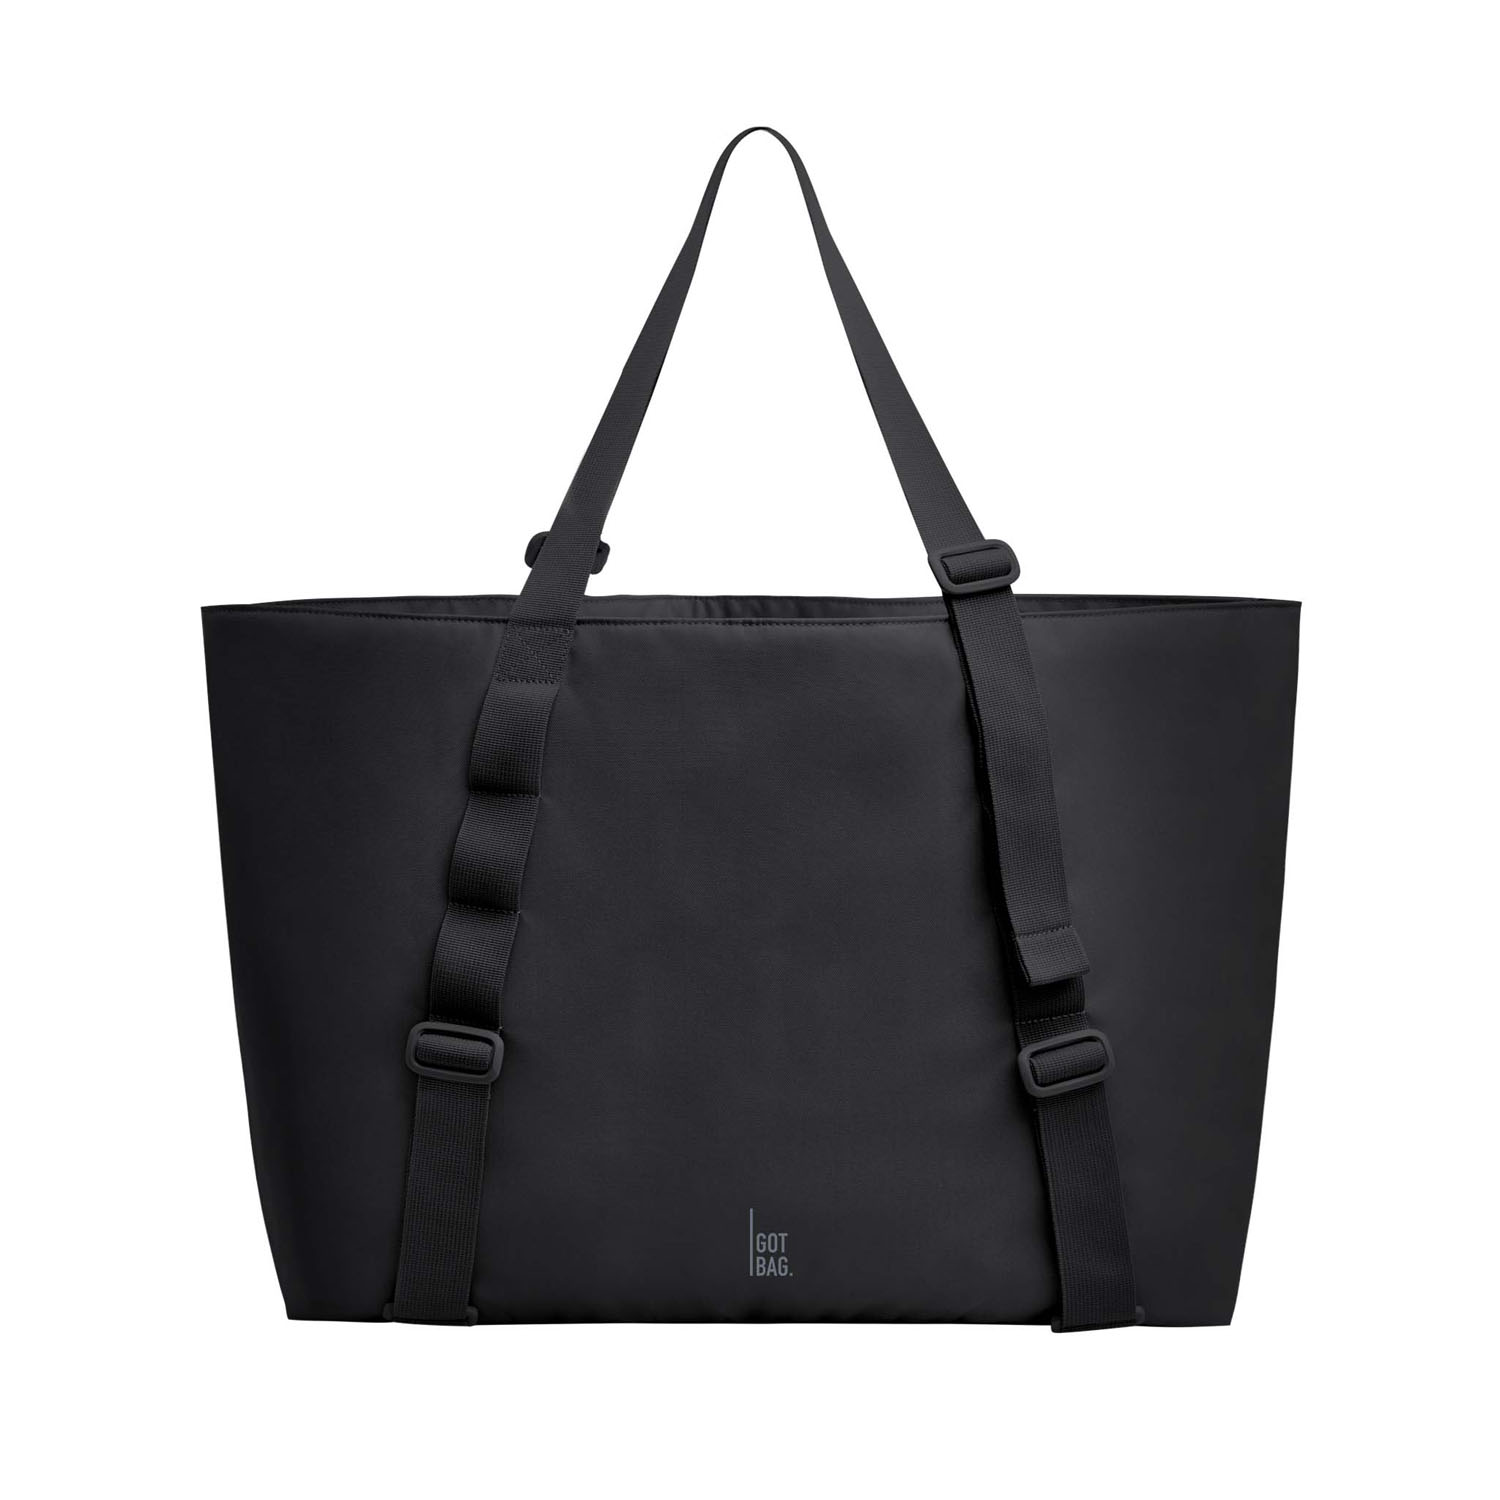 GOT BAG Tote Bag Large, Monochrome black